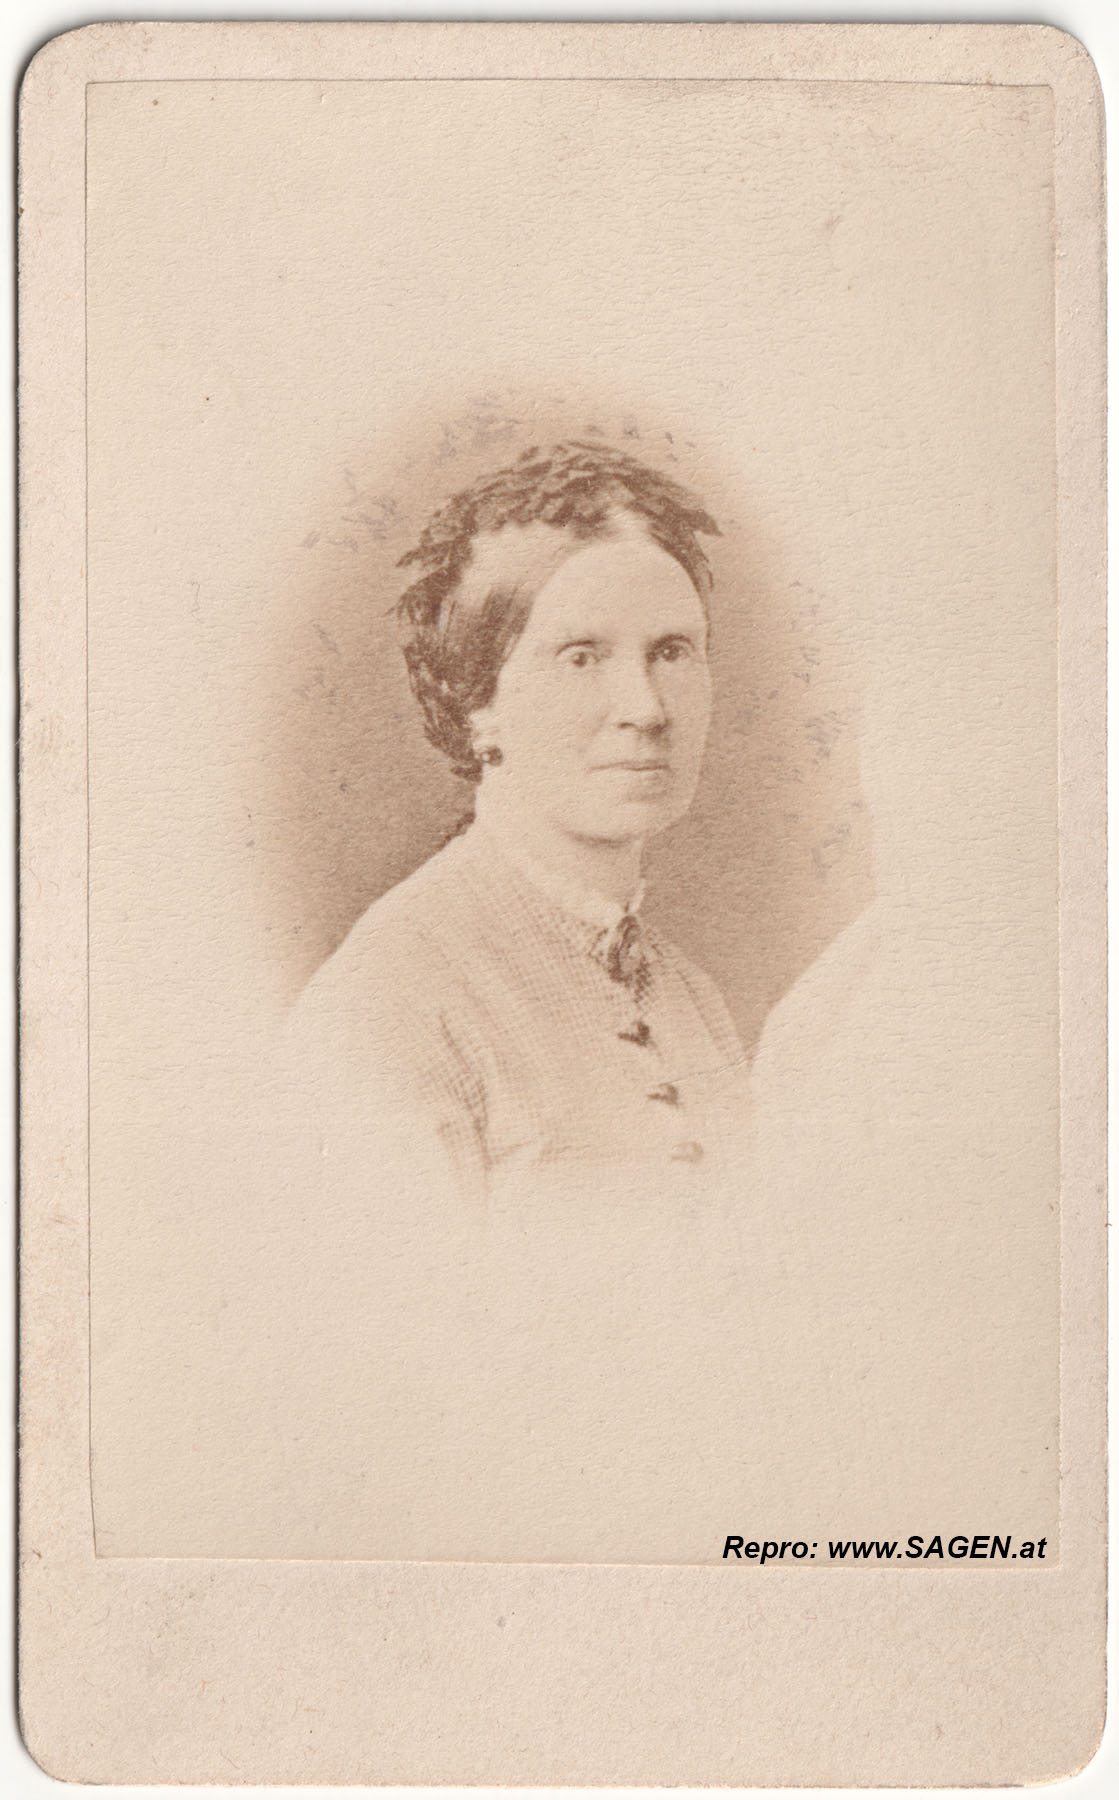 CdV Porträt Dame 1860er Jahre